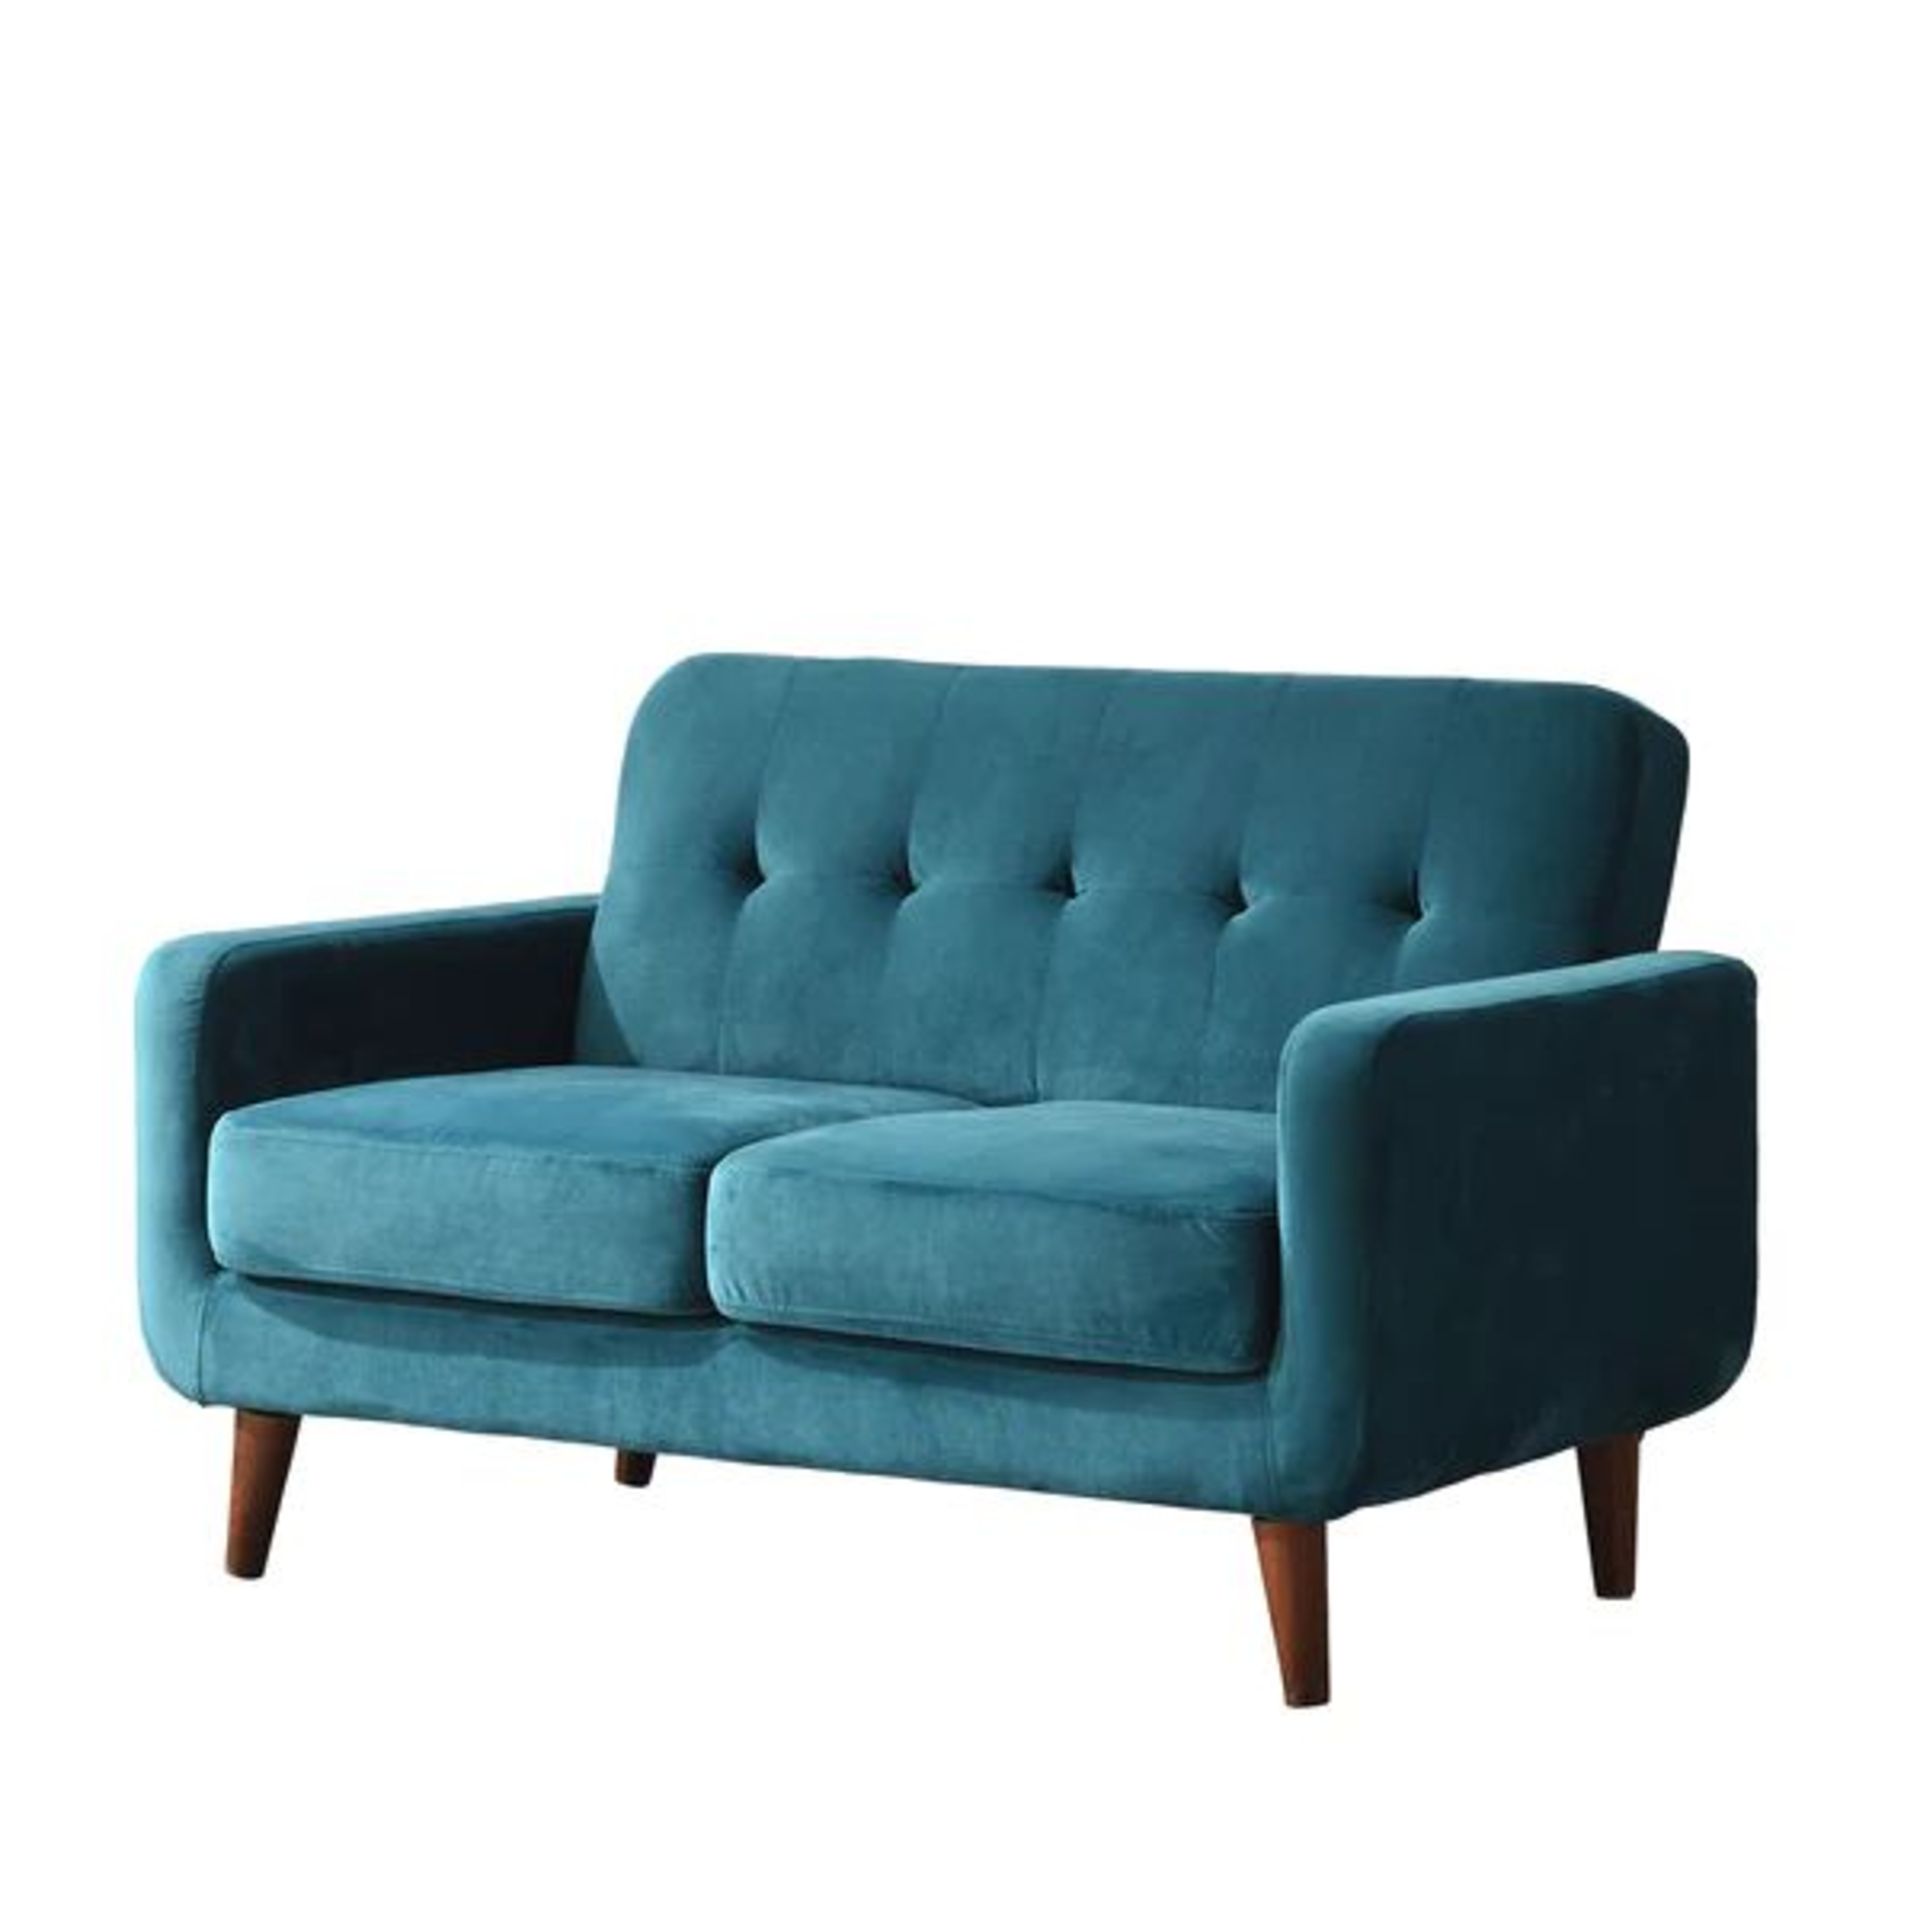 Clarence 2 Seater Sofa in Teal Blue Velvet. - RRP £459.99. R14. Upholstered with soft velvet - Image 2 of 2